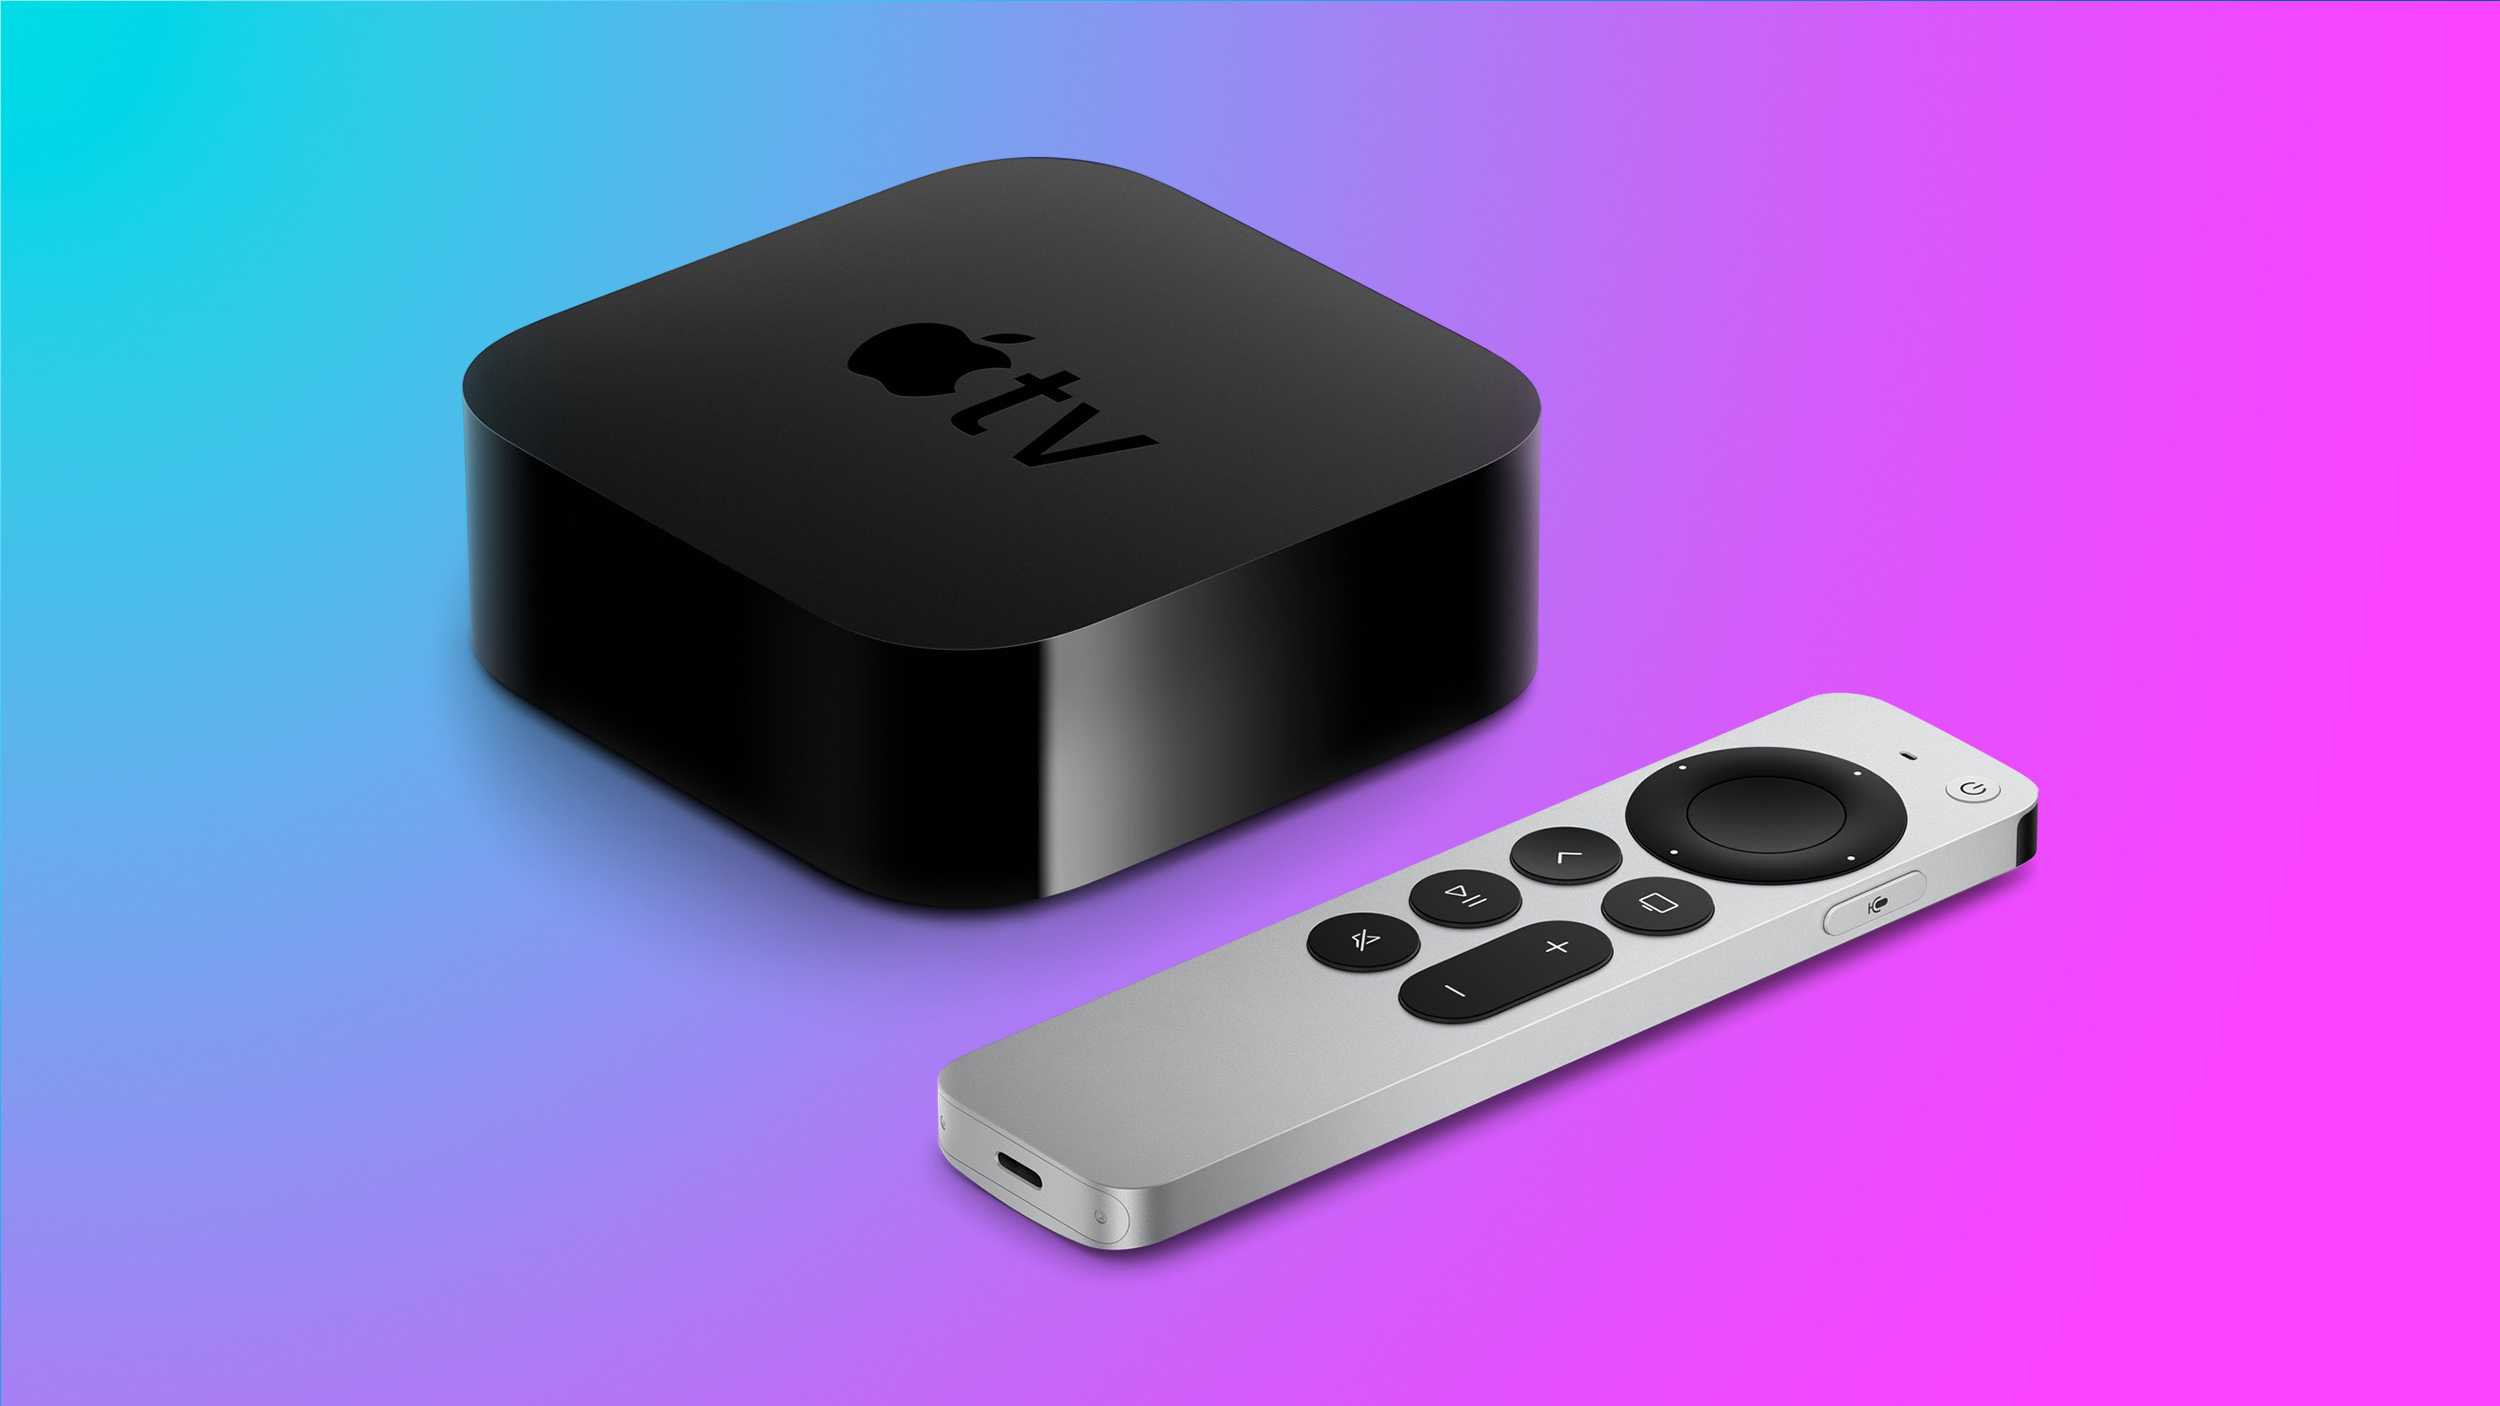 Обзор apple tv 4k. зачем она нужна и видно ли разницу?